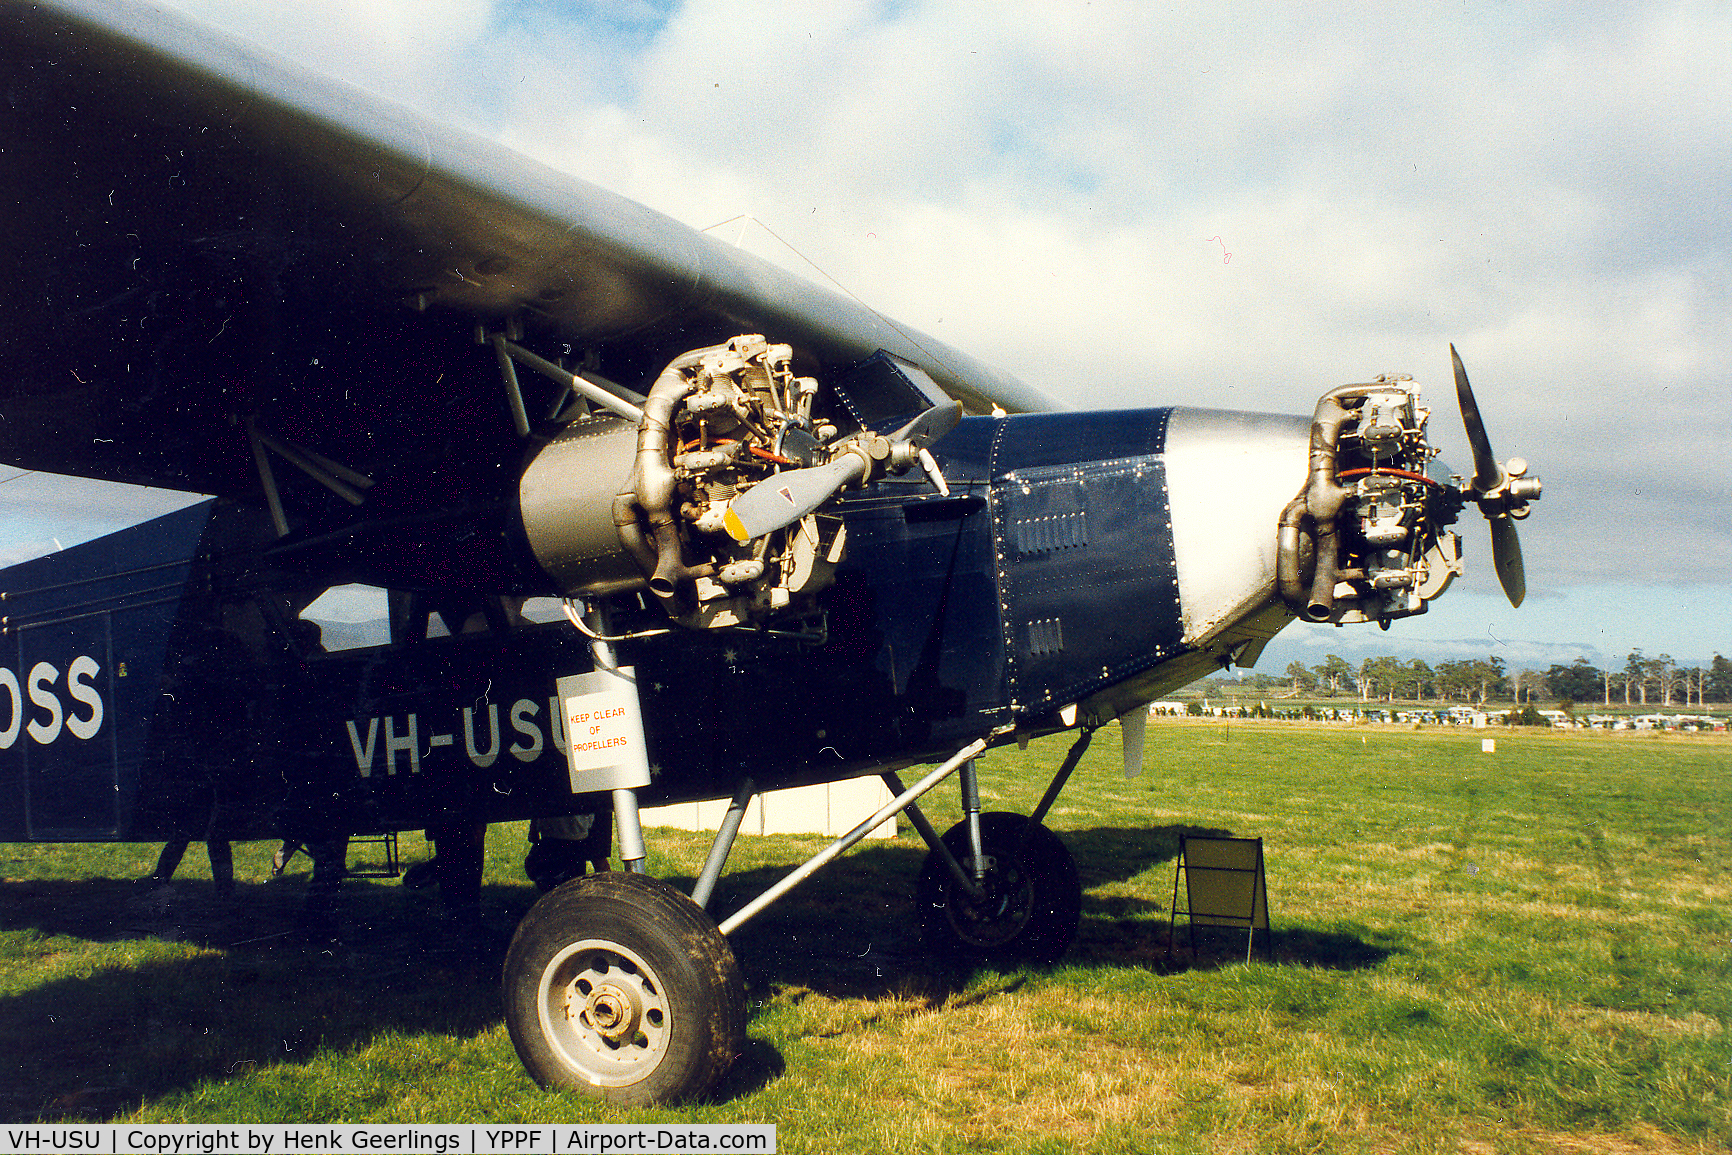 VH-USU, 1987 Fokker F.VIIb/3m Replica C/N SCA-28, Fokker F,VIIB-3M , VH-USU , Southern Cross